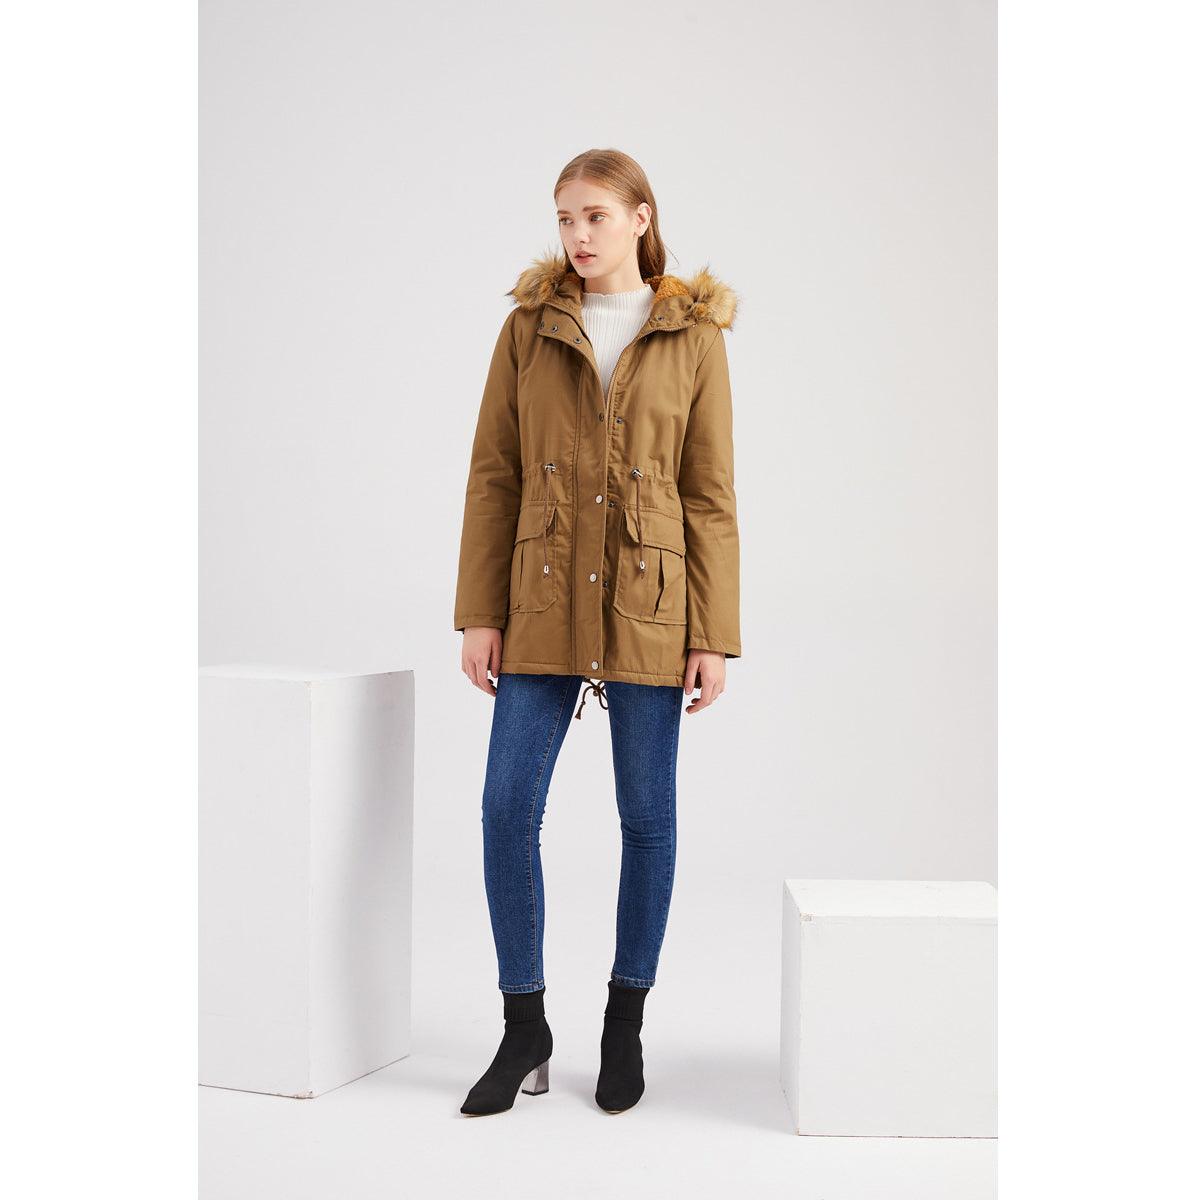 Winter Jackets For Women Plus Size Mid-Length Parka Winter Outerwear Jacket Soft Fleece Warm Snow Coat - Estação do Inverno